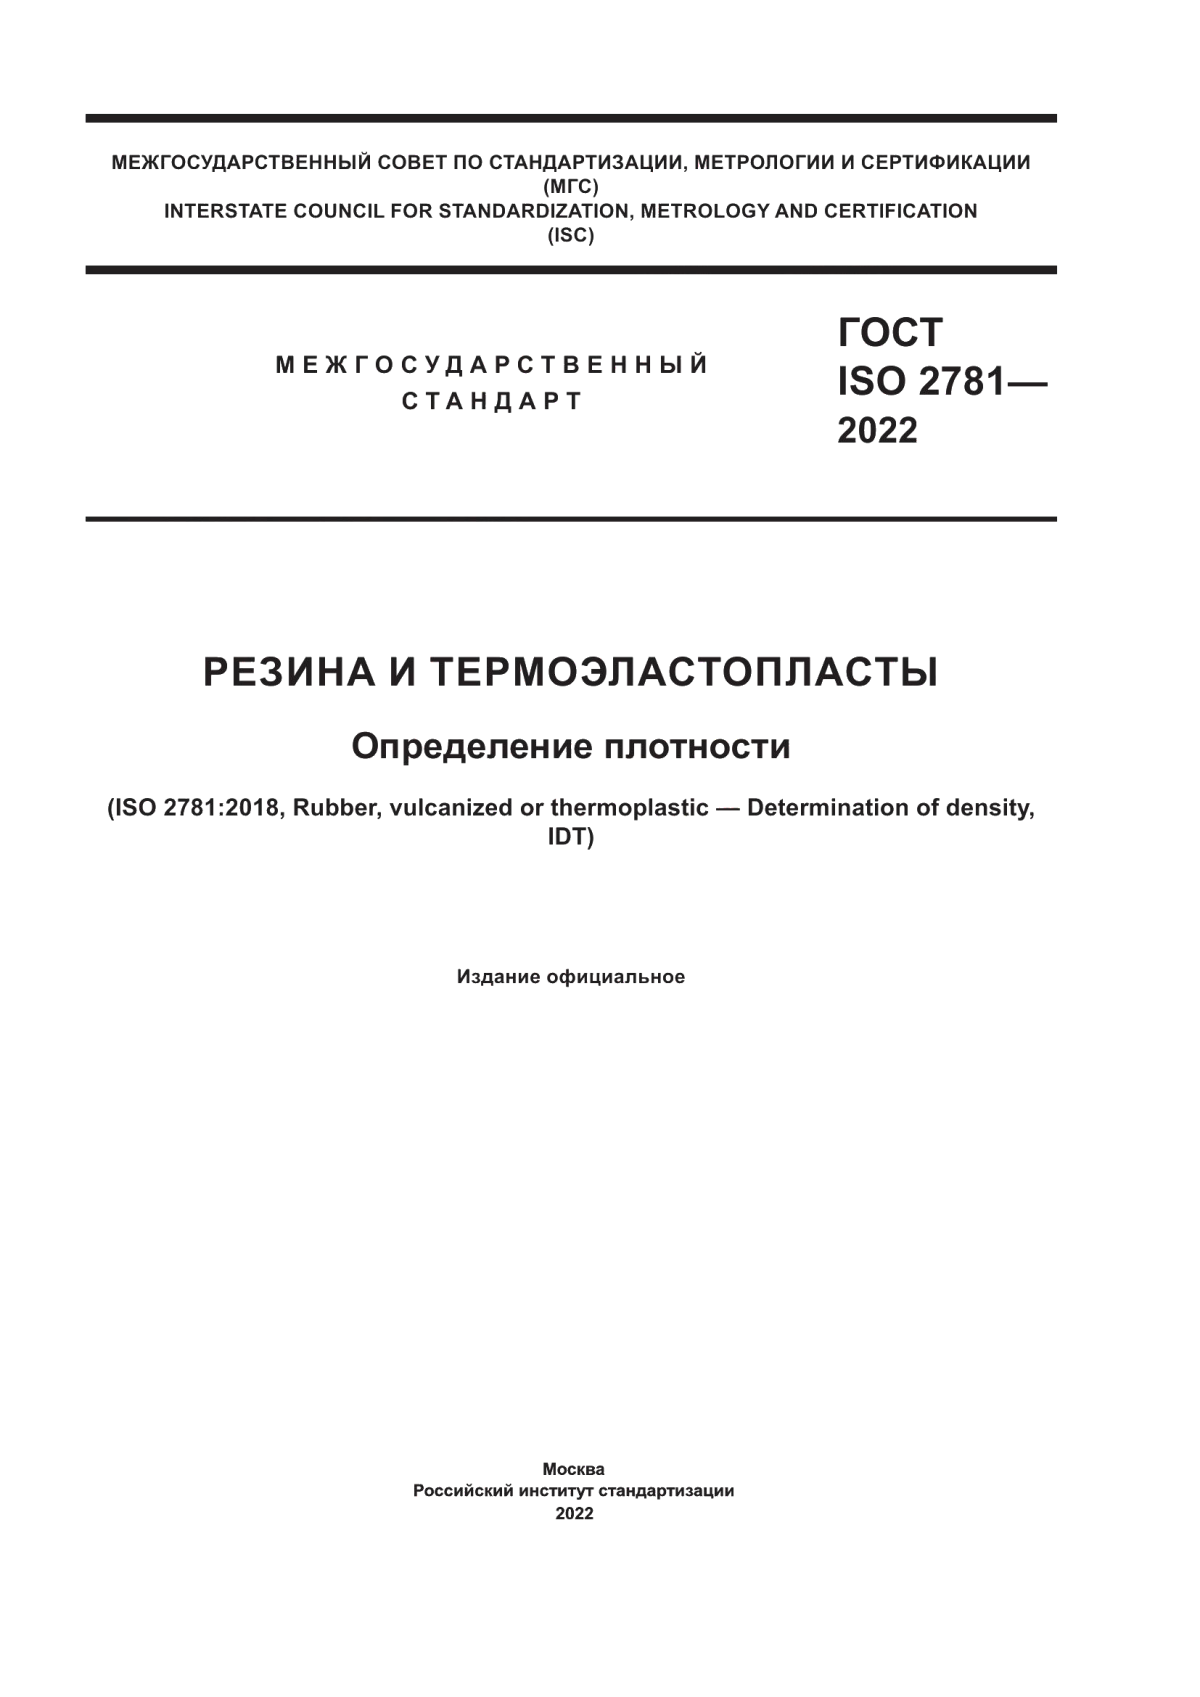 ГОСТ ISO 2781-2022 Резина и термоэластопласты. Определение плотности